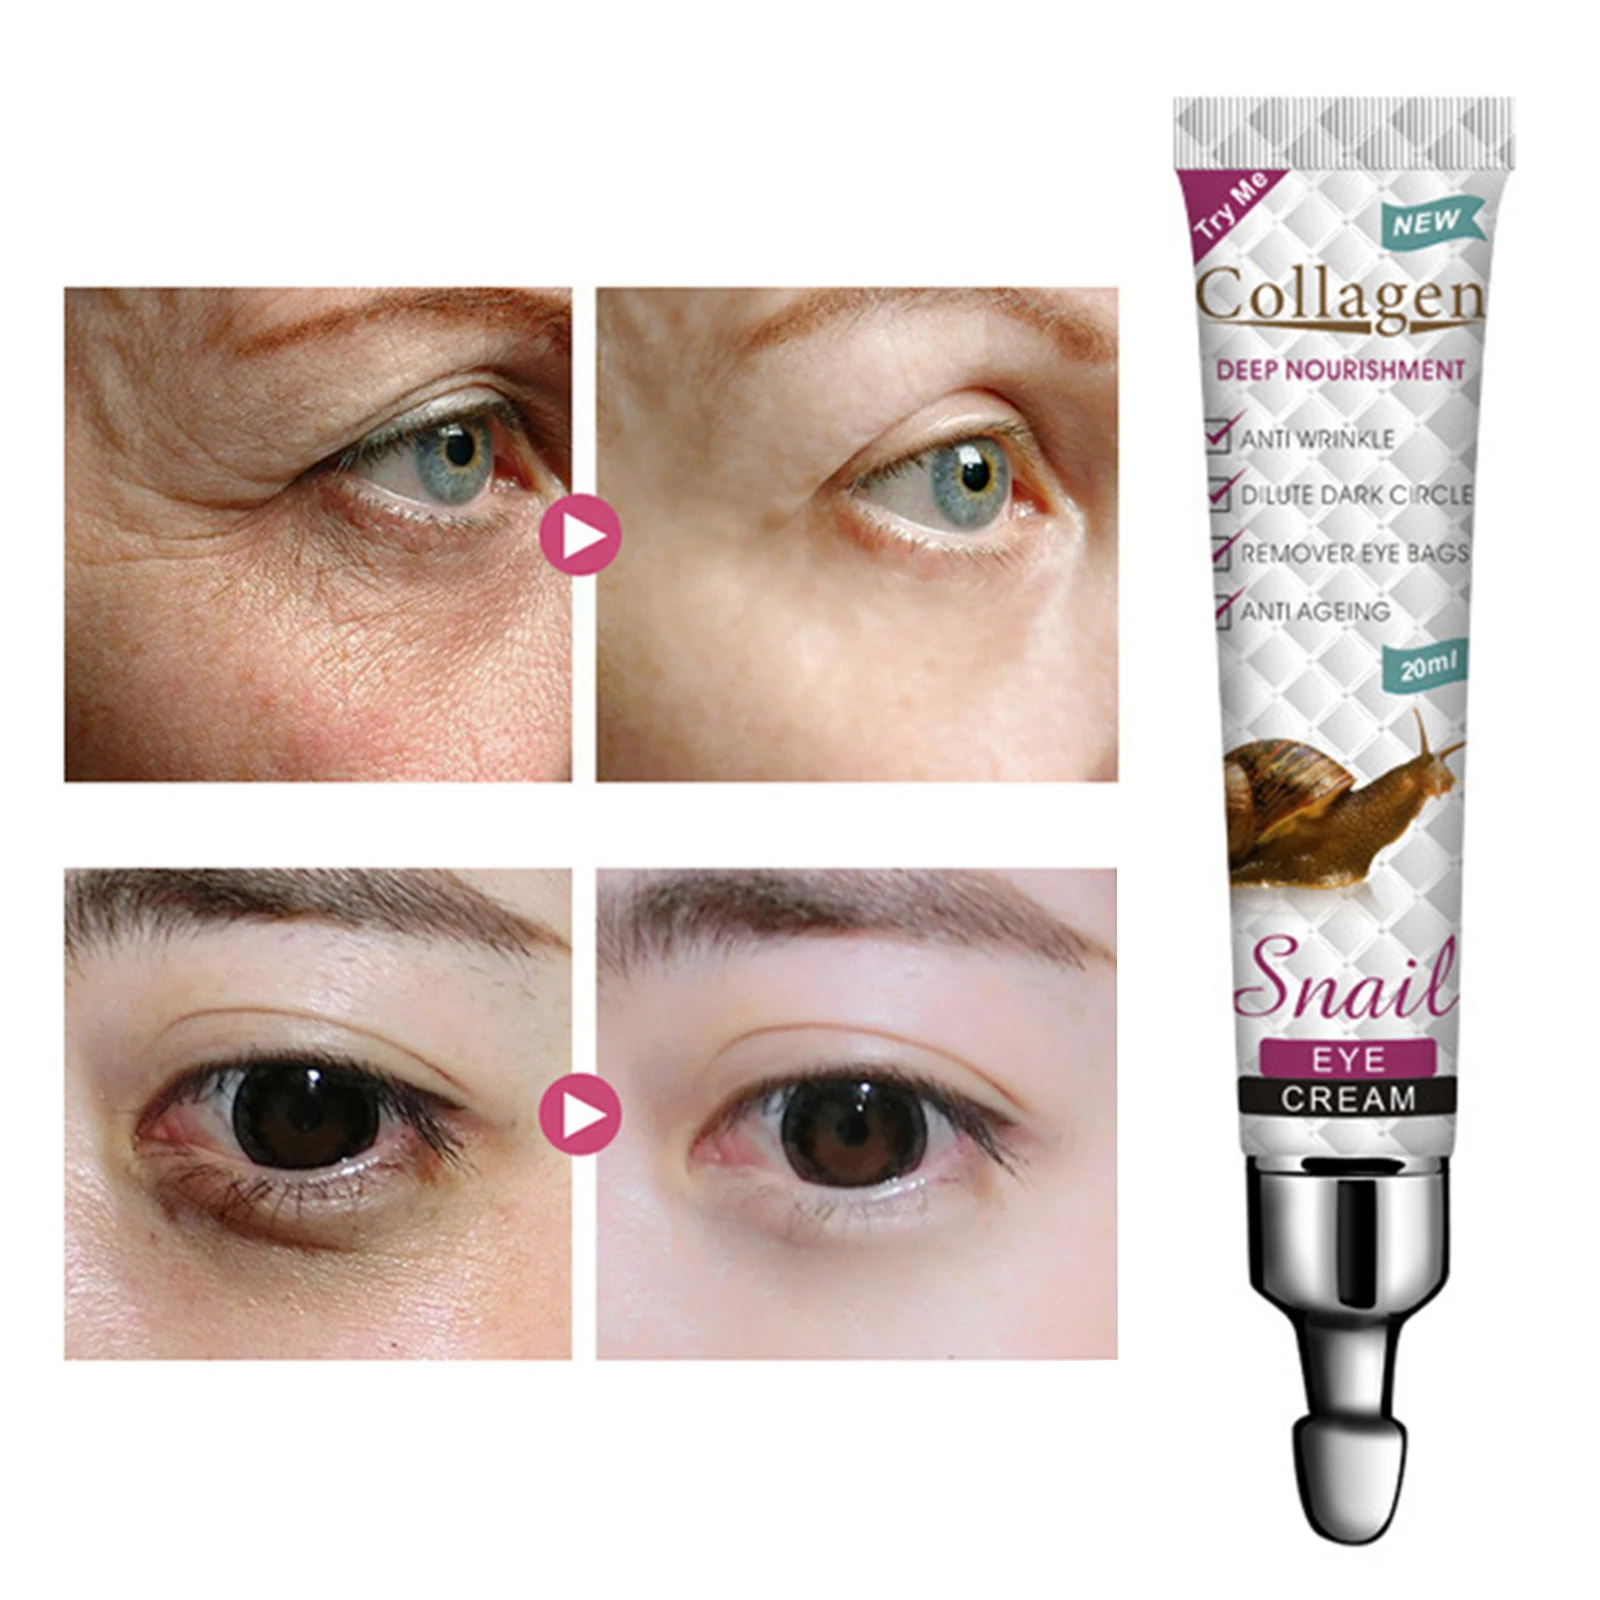 

Snail Eye Cream Nourishing Dry Skin Fade Fine Lines Brighten Eye Collagen Cream Remove Dark Circles Eye Bags Skin Care Eye Bal